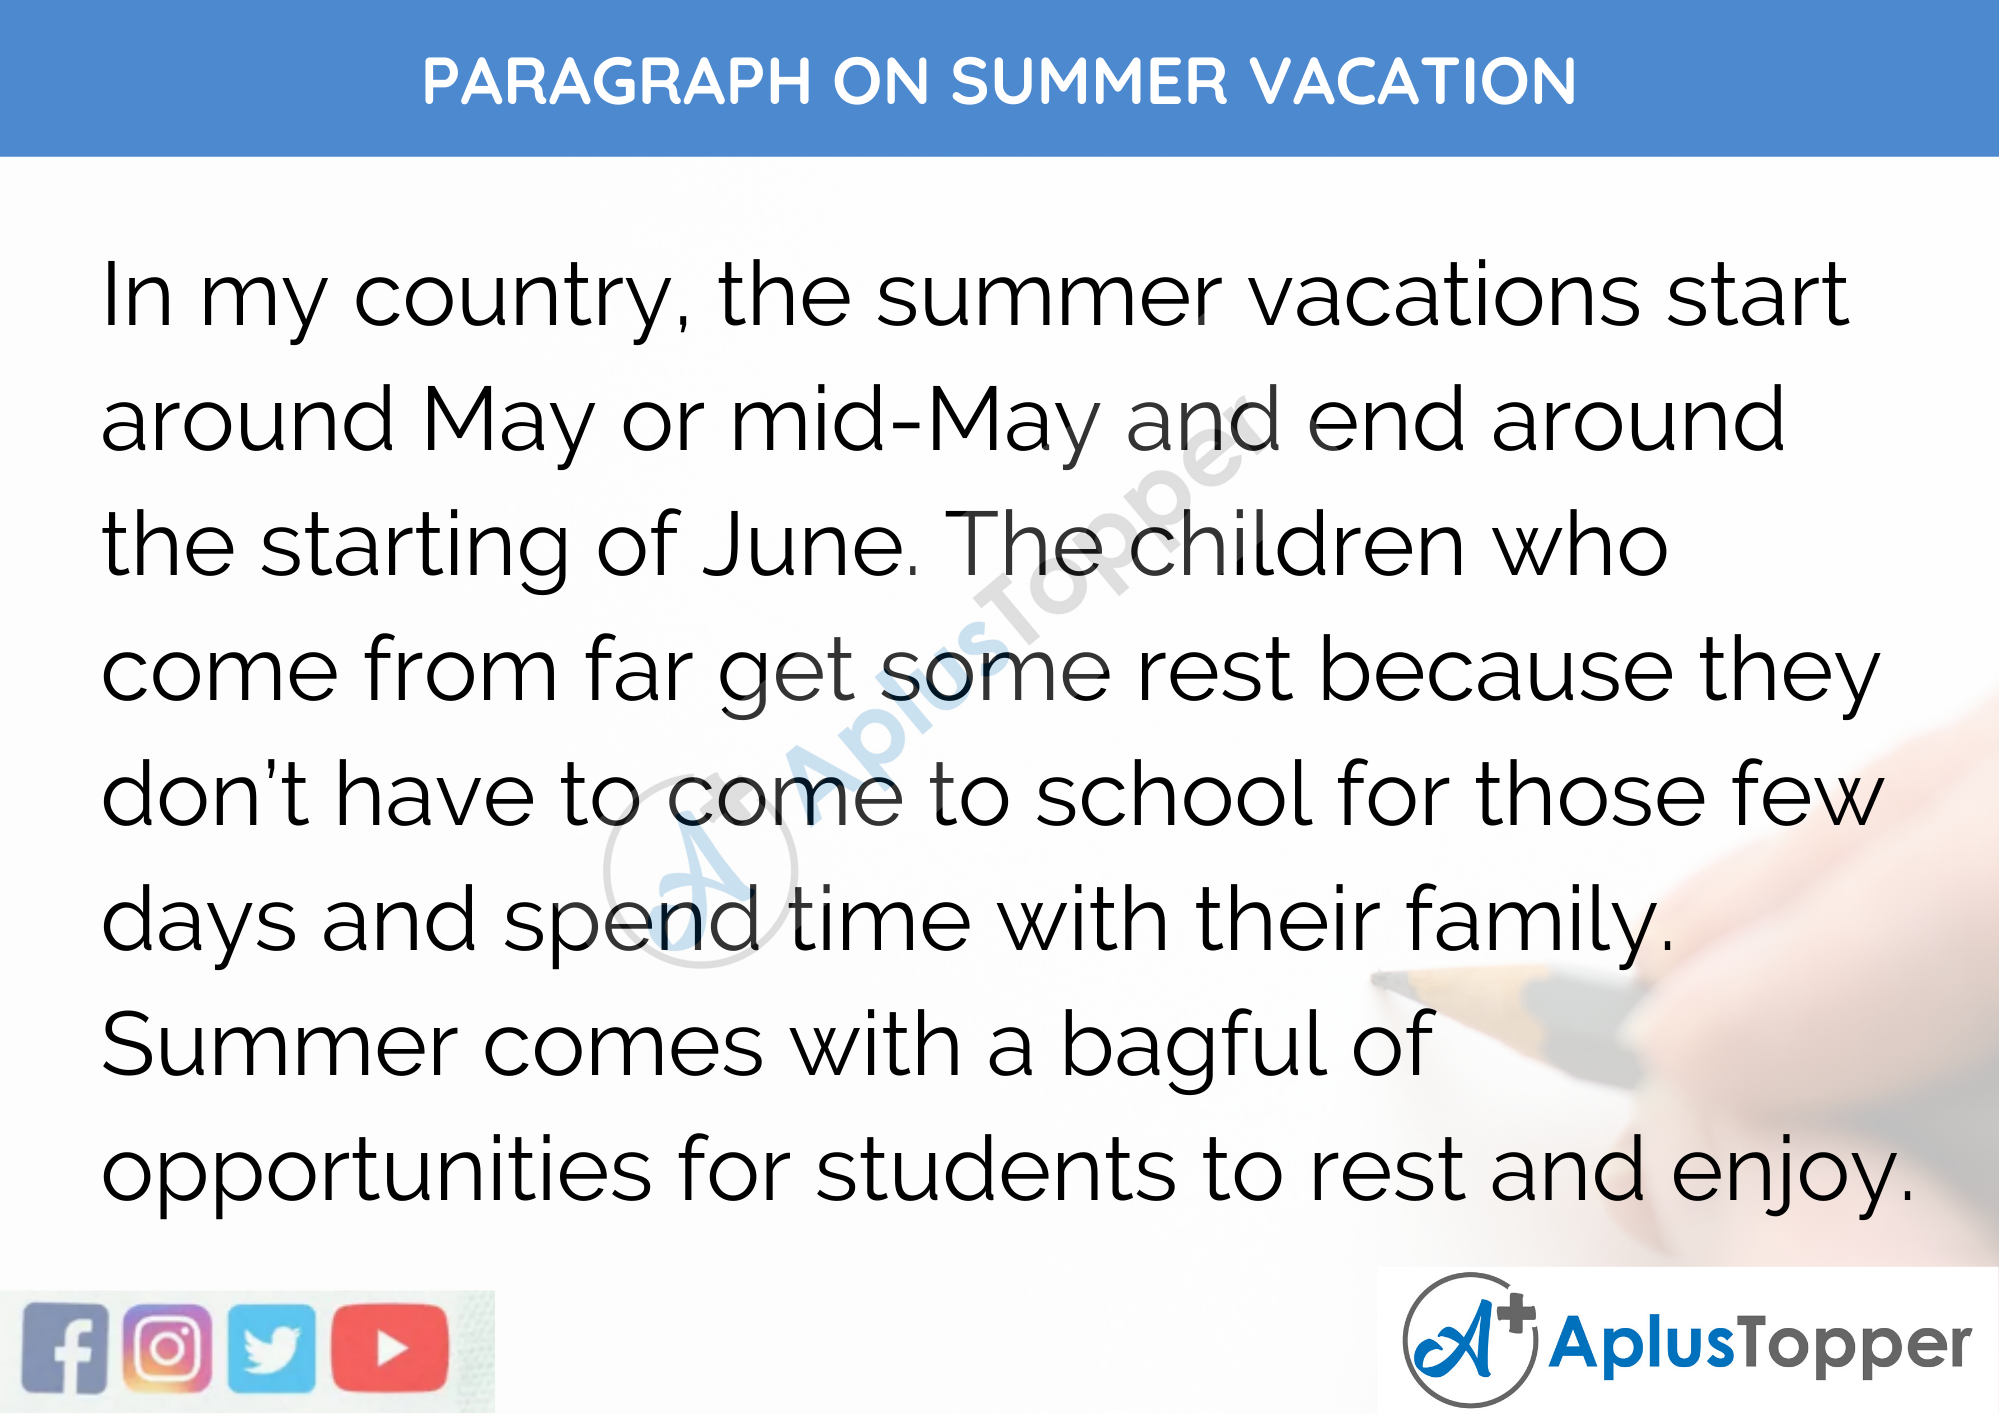 summer vacation essay in english 200 words